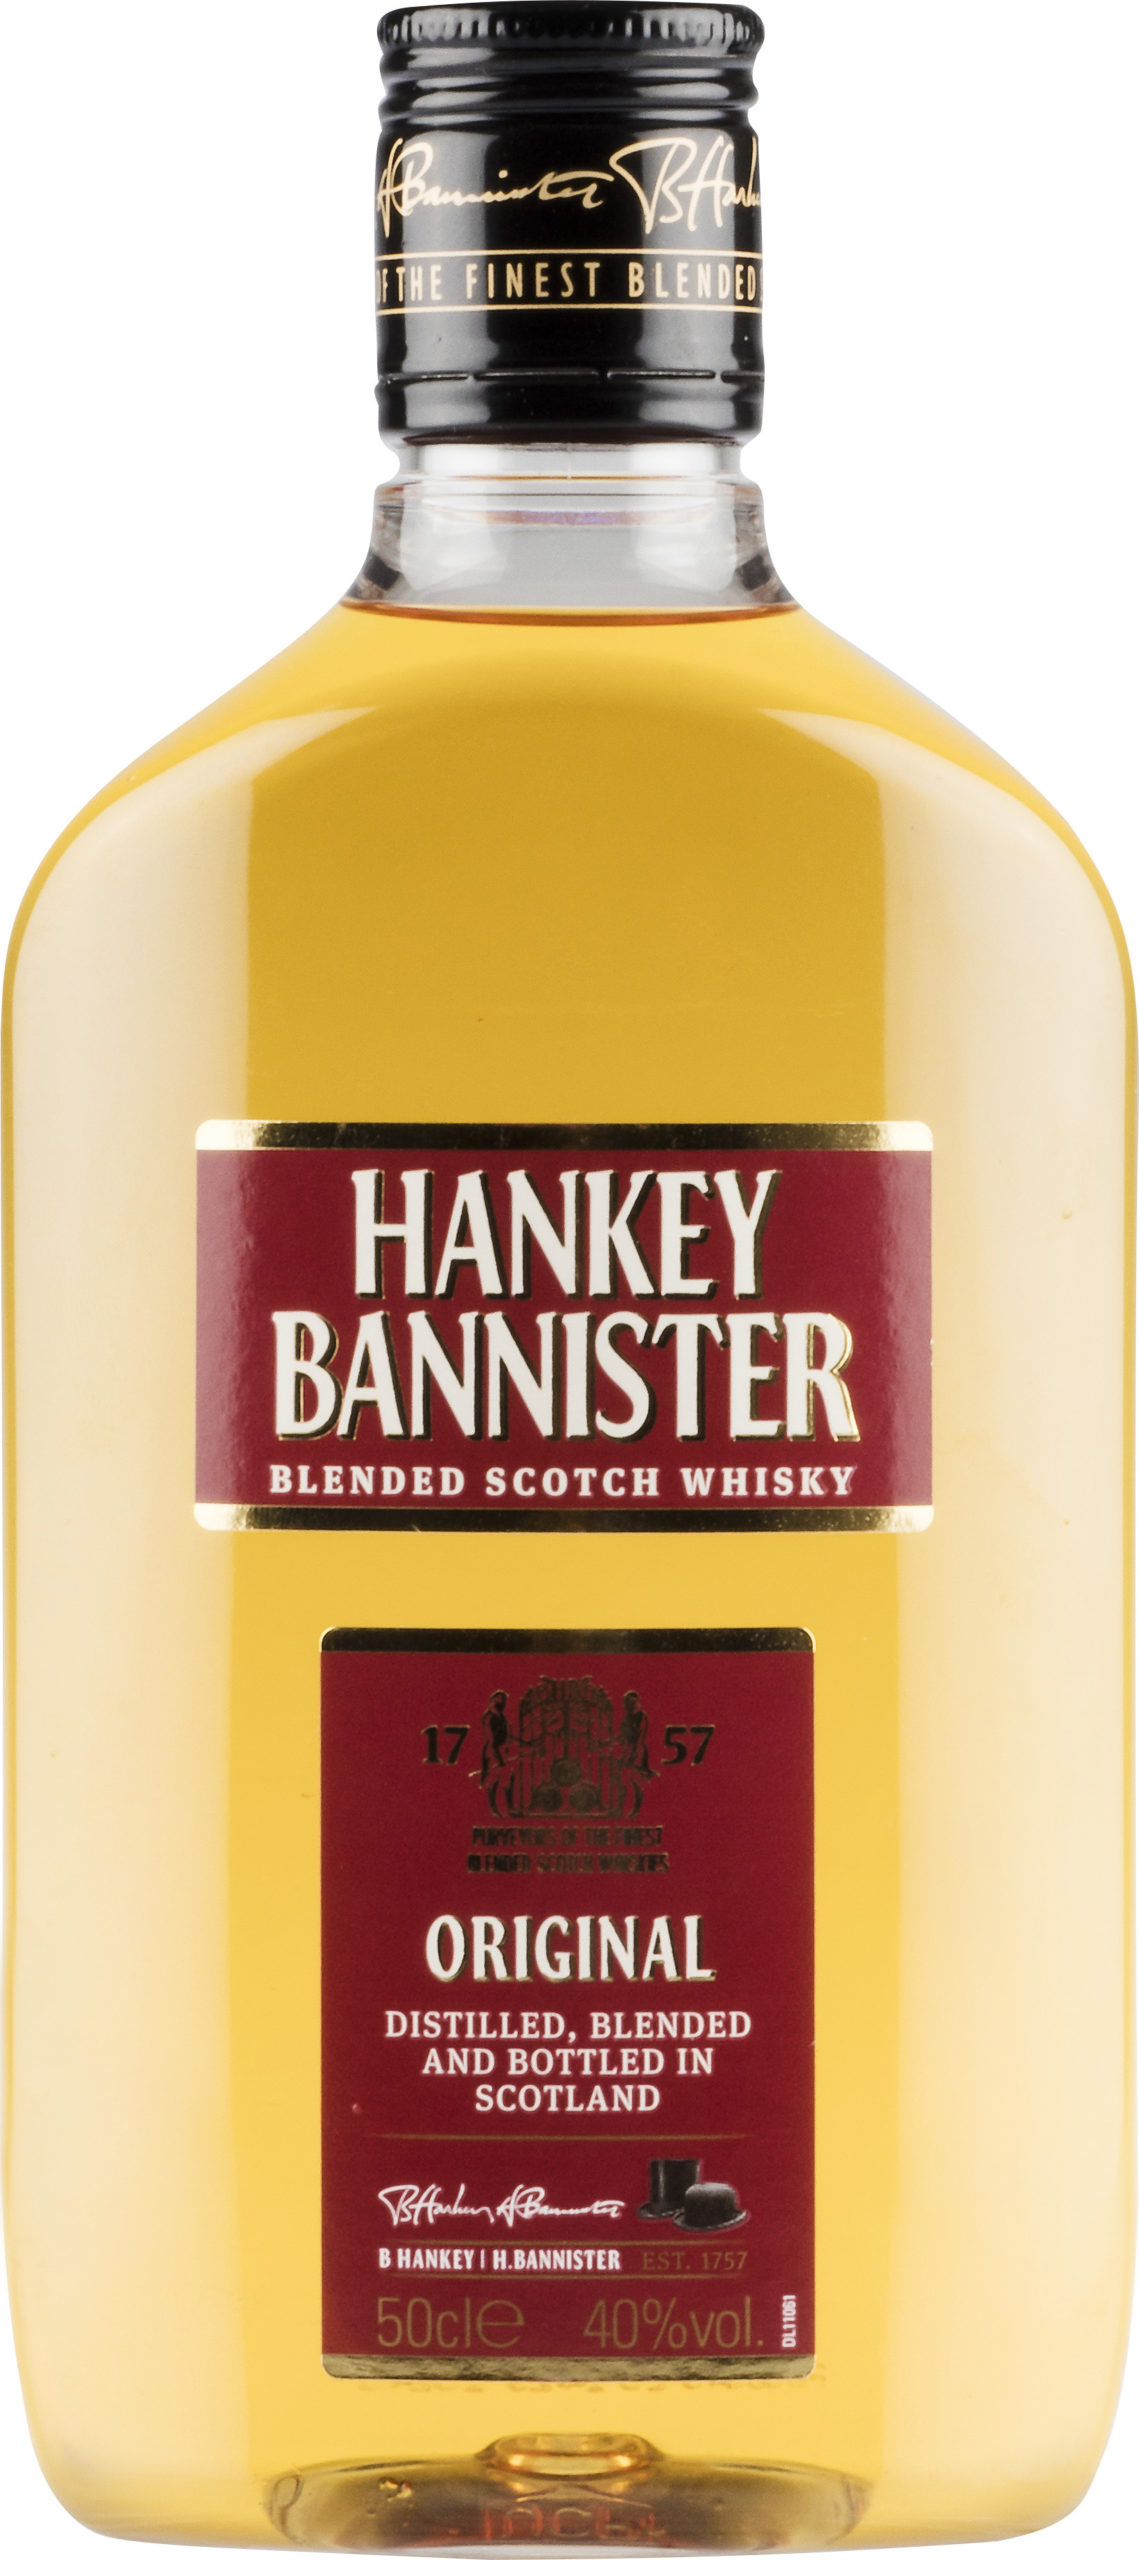 Hankey Bannister plastic bottle